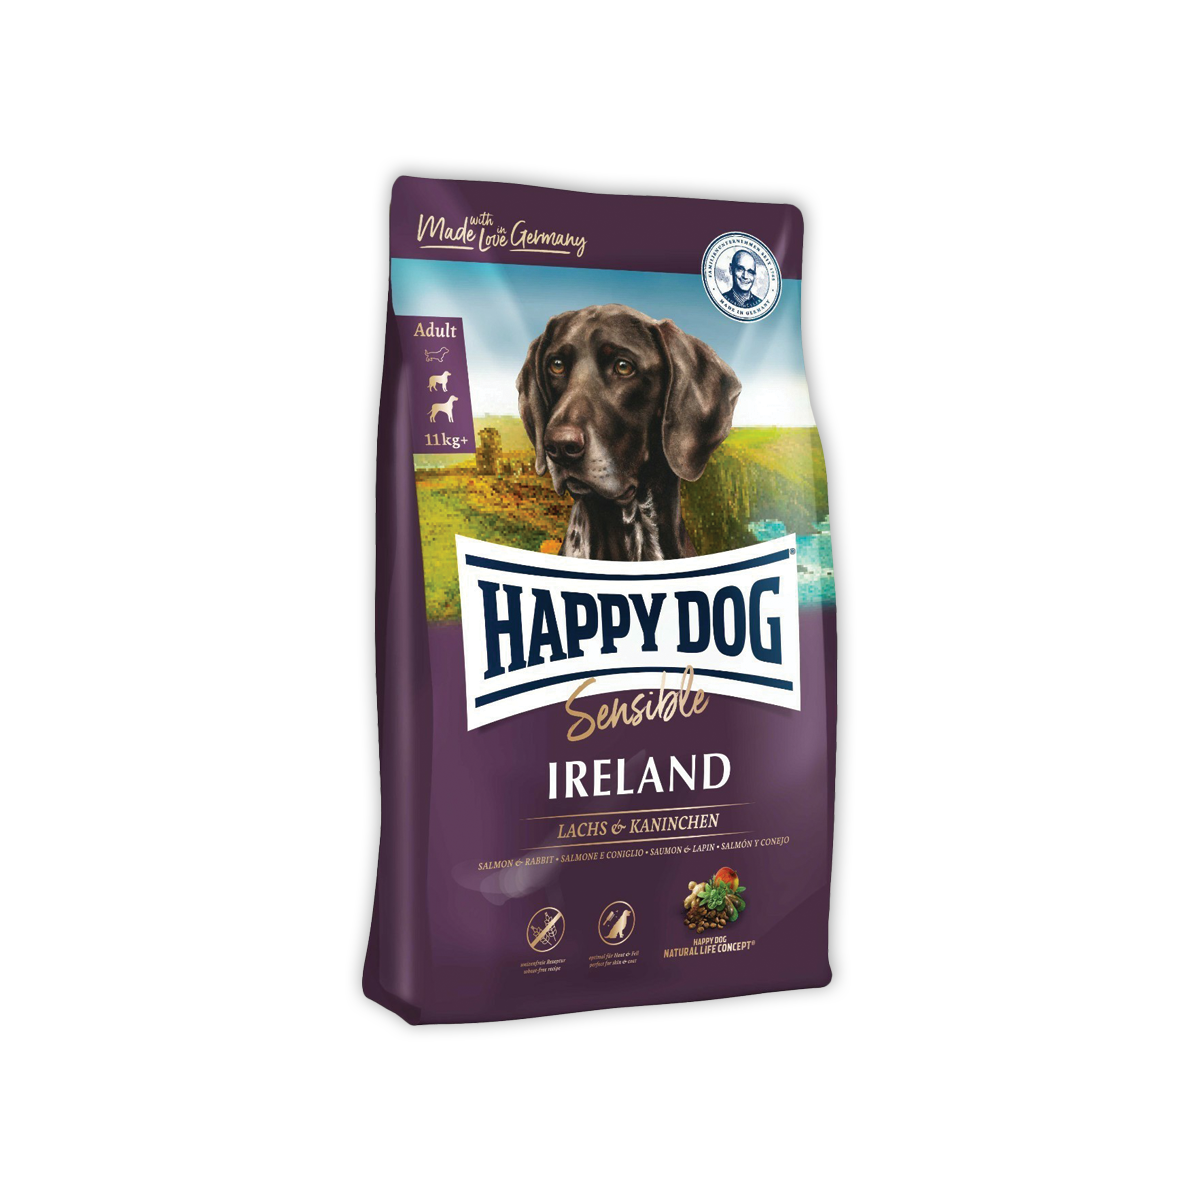 Happy Dog Irland แฮปปี้ ด็อก ไอร์แลนด์ อาหารสำหรับสุนัขโตพันธุ์กลาง-ใหญ่ สูตรเนื้อกระต่ายป่าและปลาแซลมอน